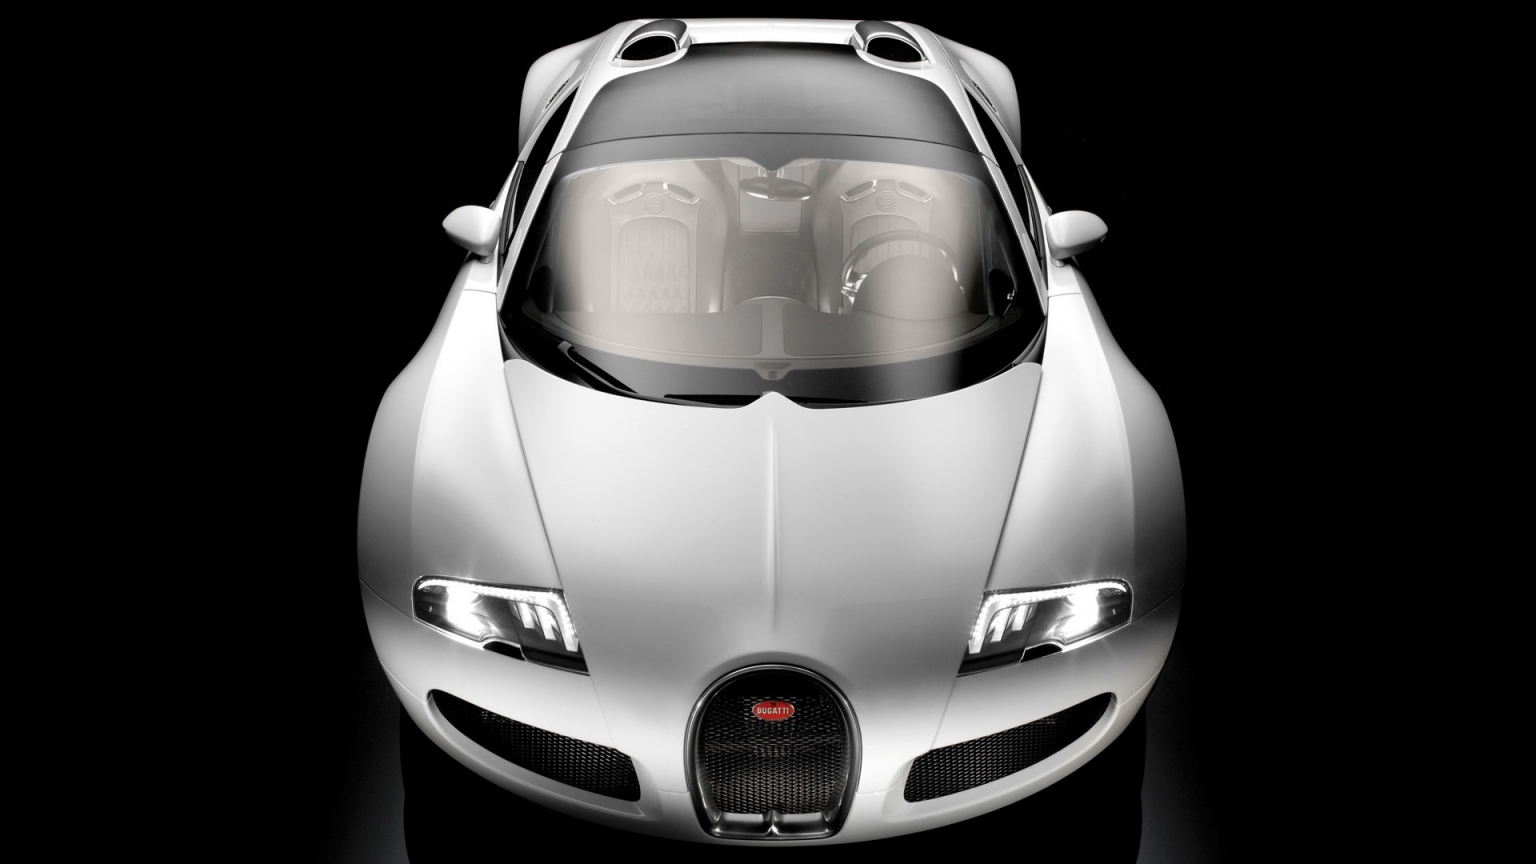 Bugatti Veyron 16.4 Grand Sport 2009 - Front Top Studio for 1536 x 864 HDTV resolution